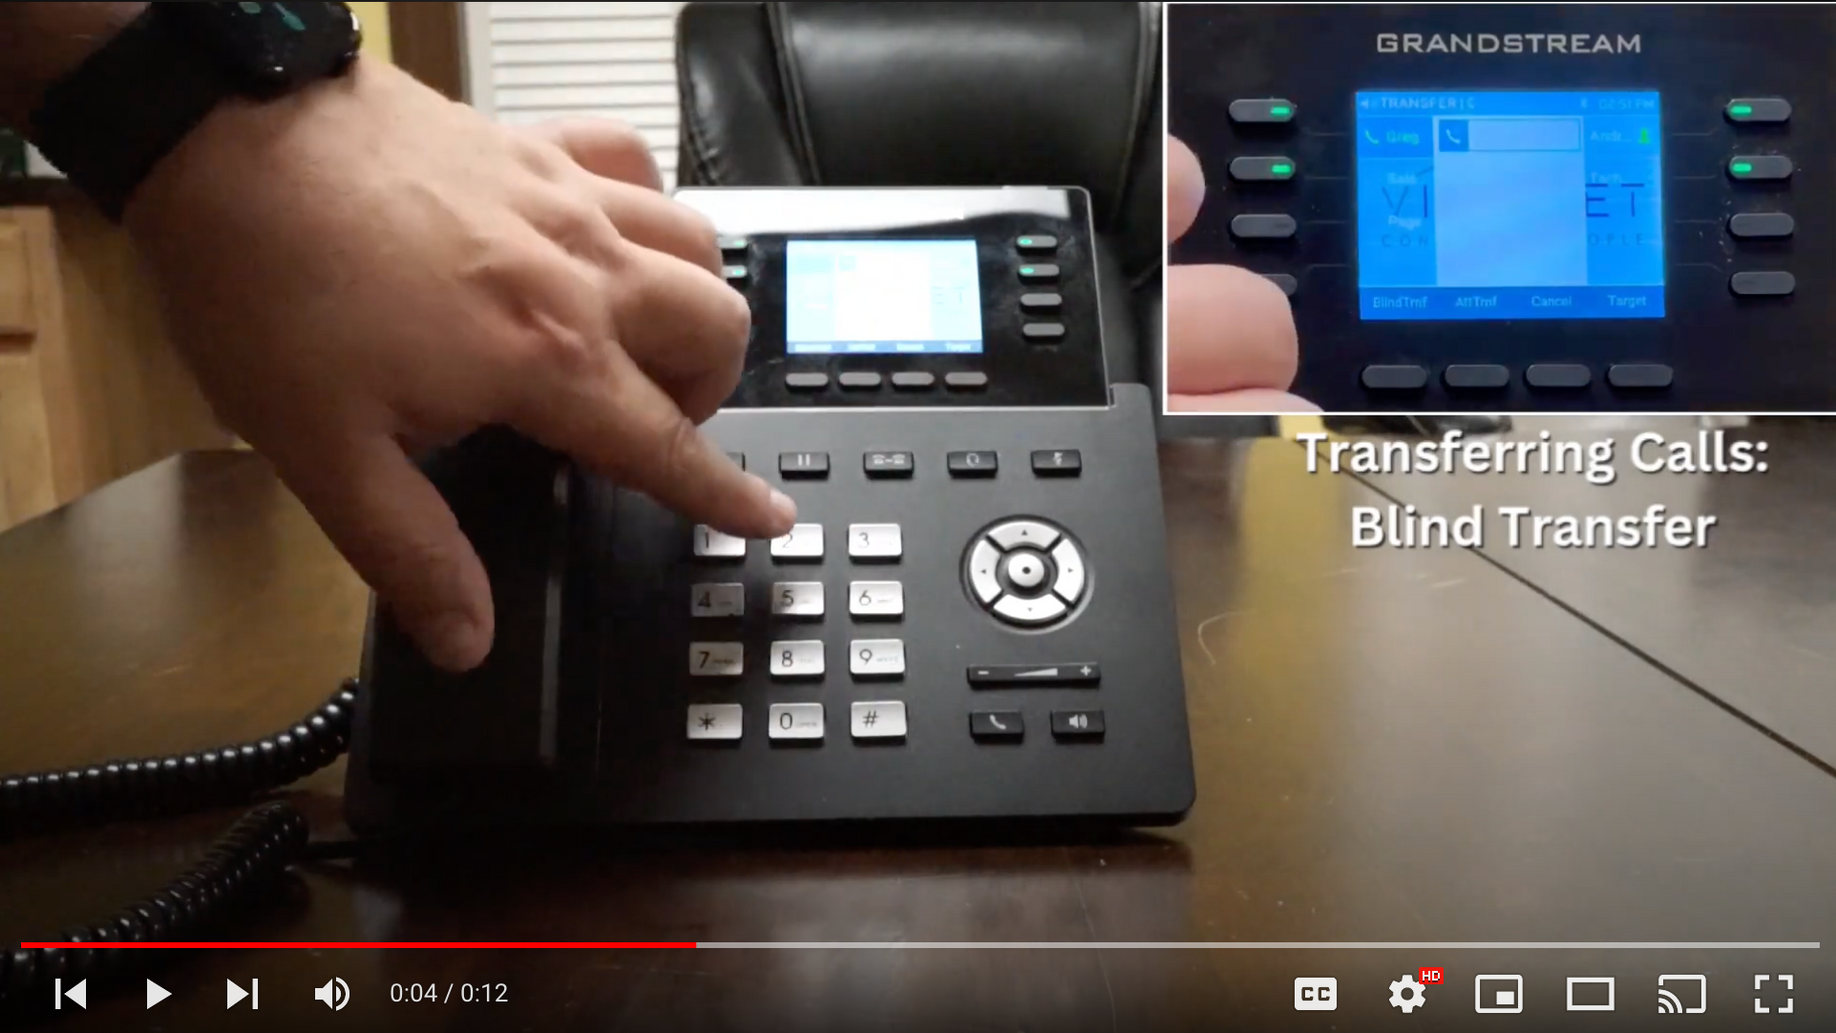 Vistanet's Demonstration Videos for Using Grandstream Desktop Phones and Mobile Apps